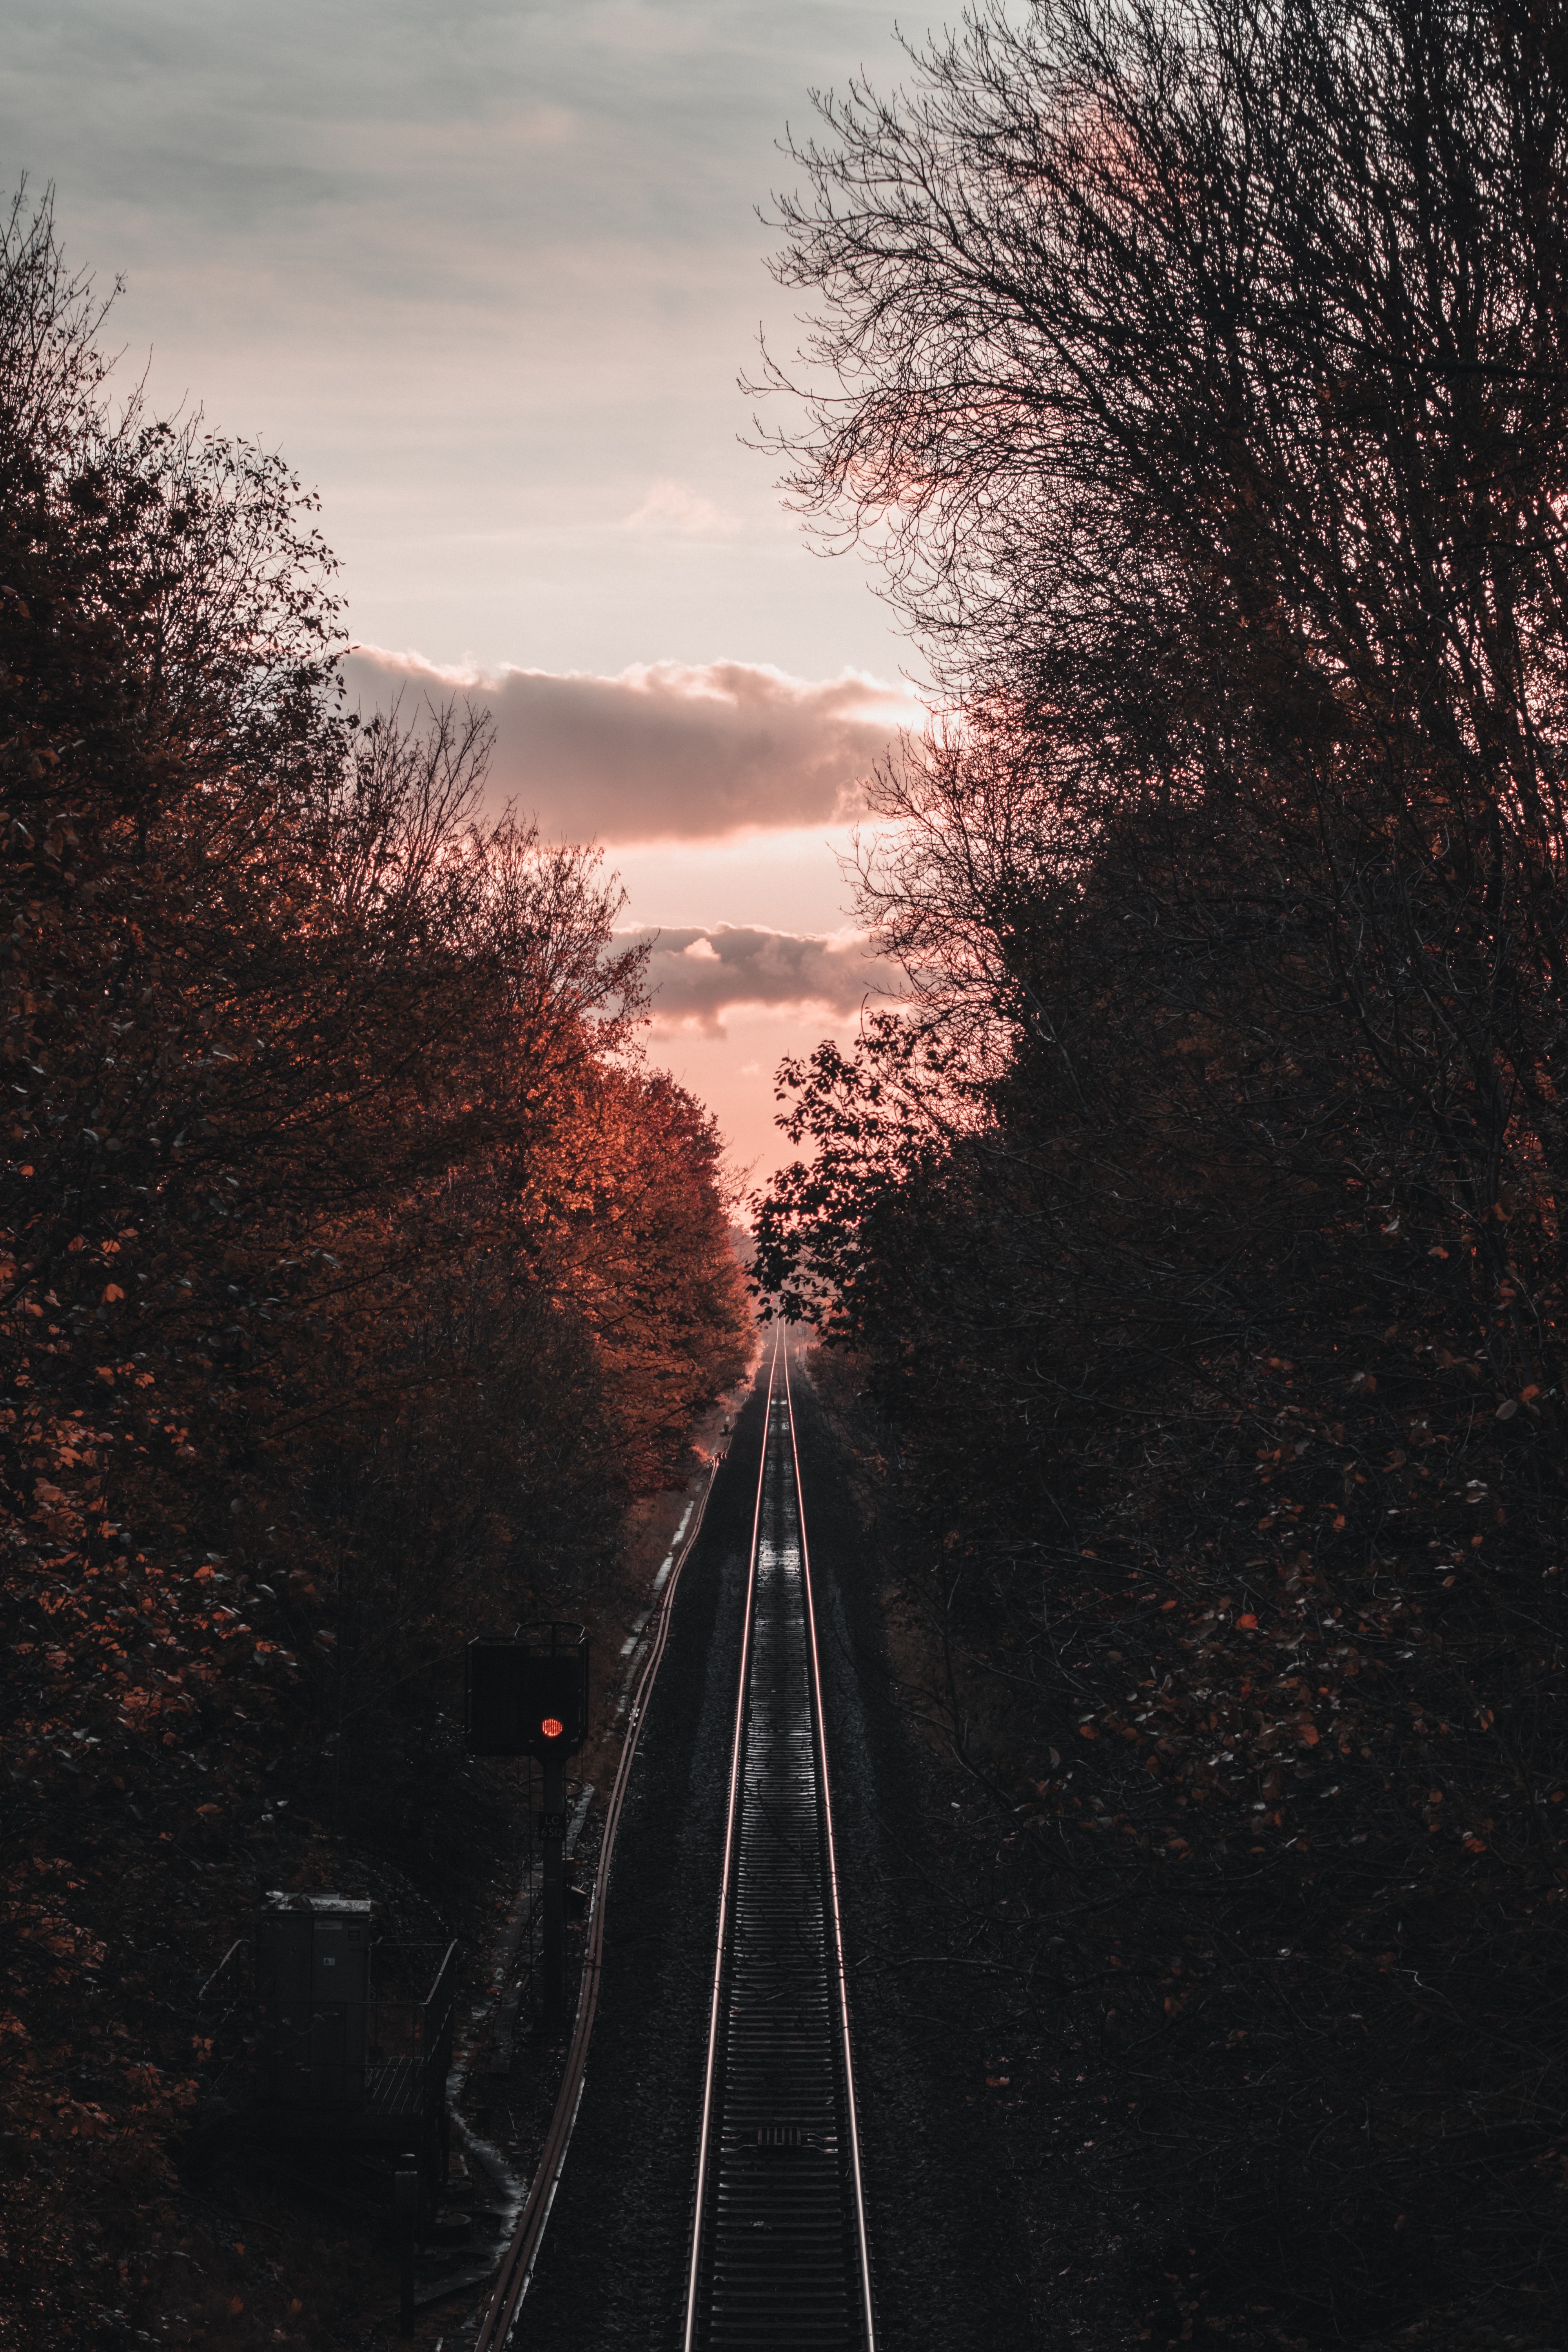 trees, twilight, view from above, dark, dusk, railway, rails